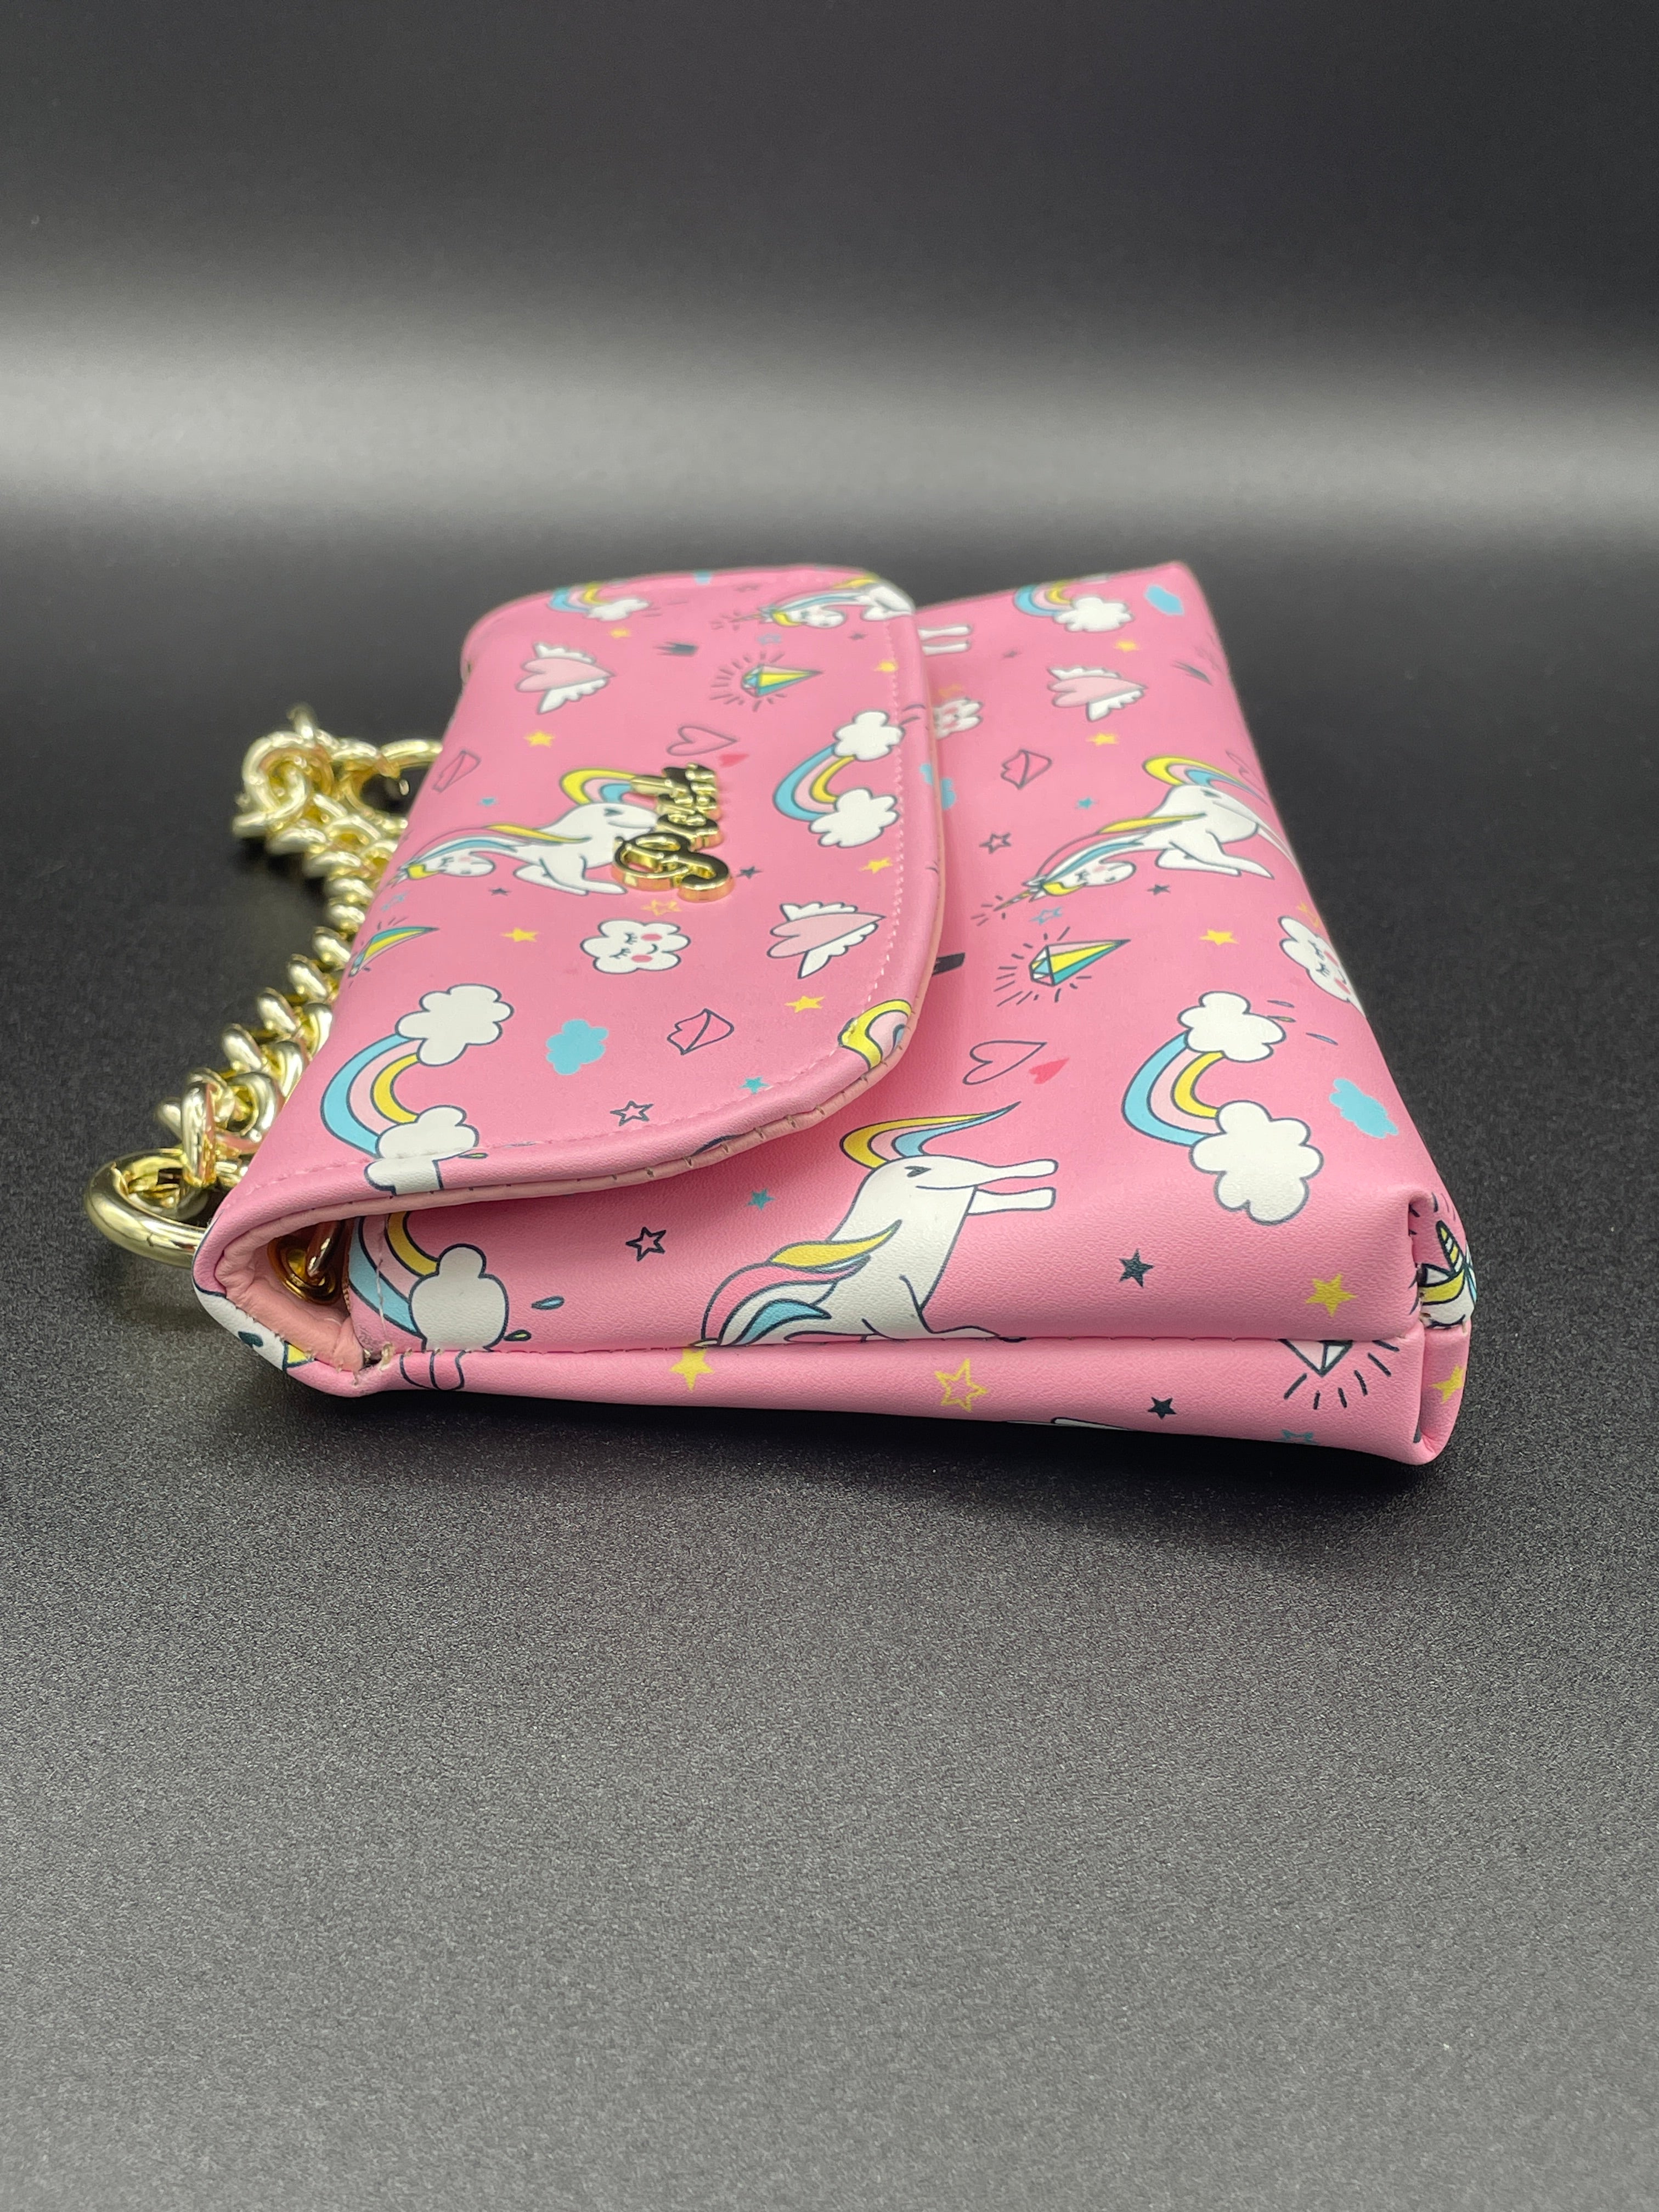 Posh Thailand Pink Unicorn Rainbow Front Flap Double Pocket Crossbody Bag